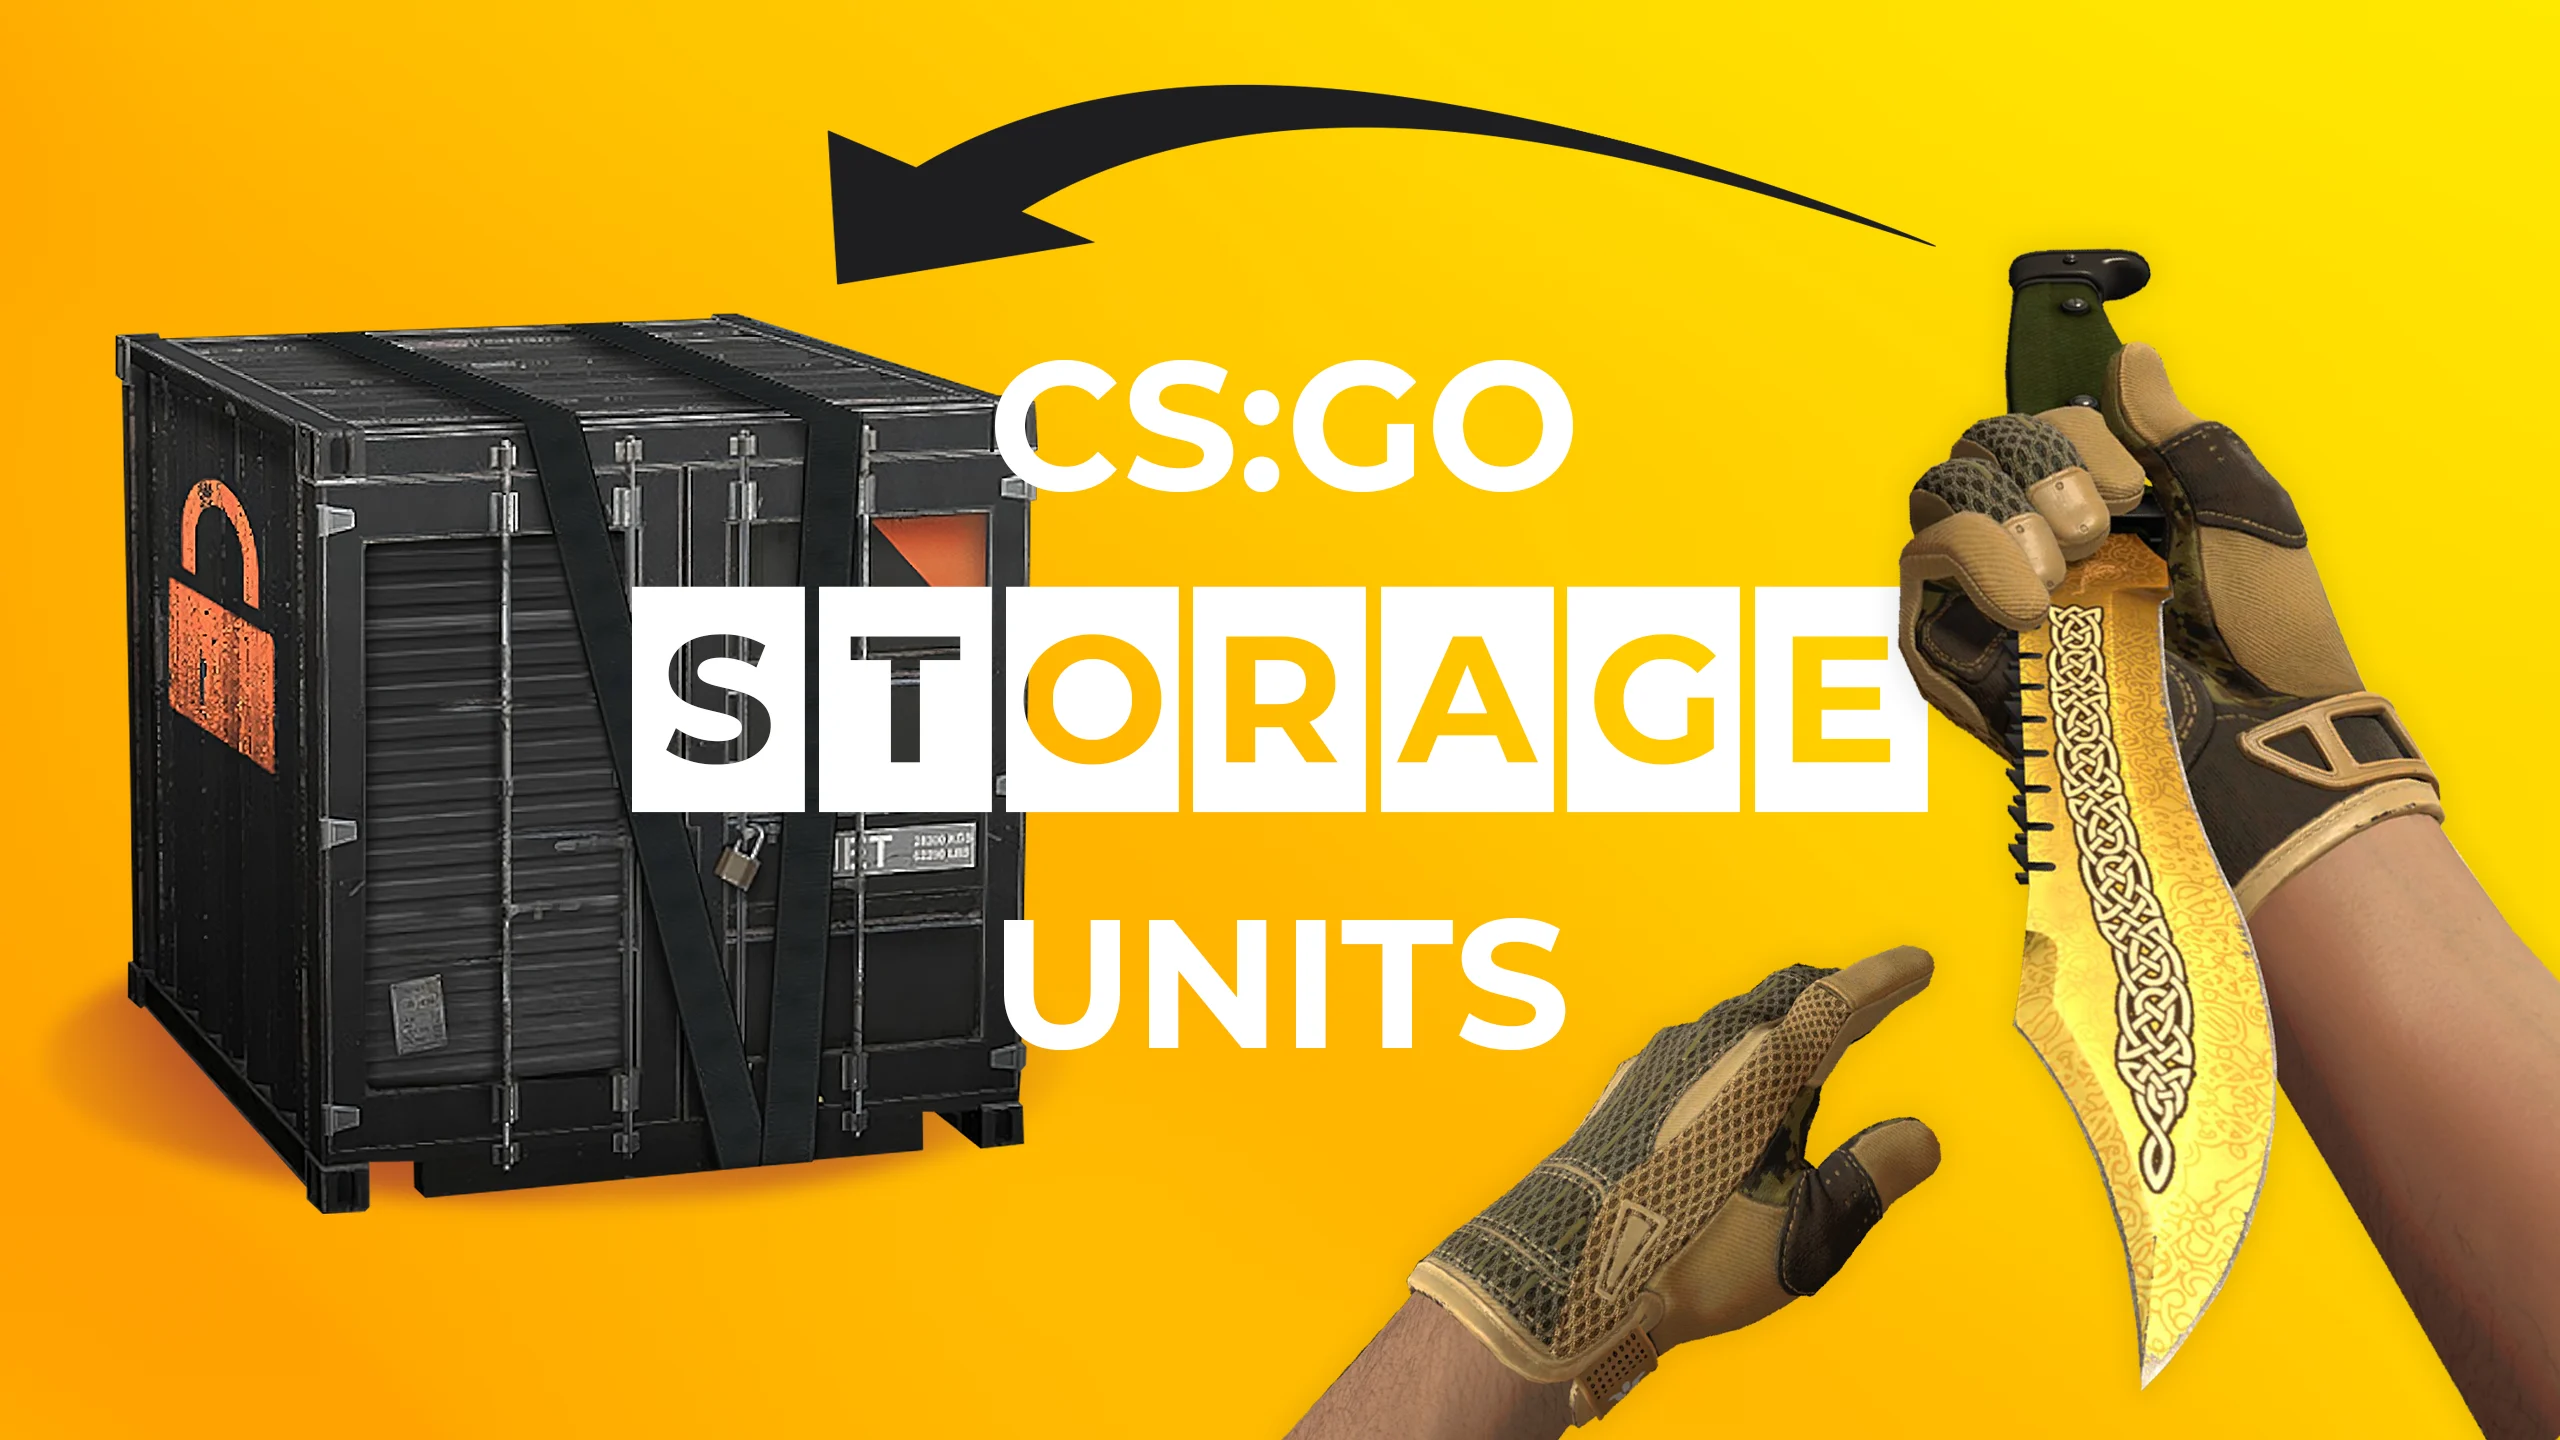 CS:GO Storage Units